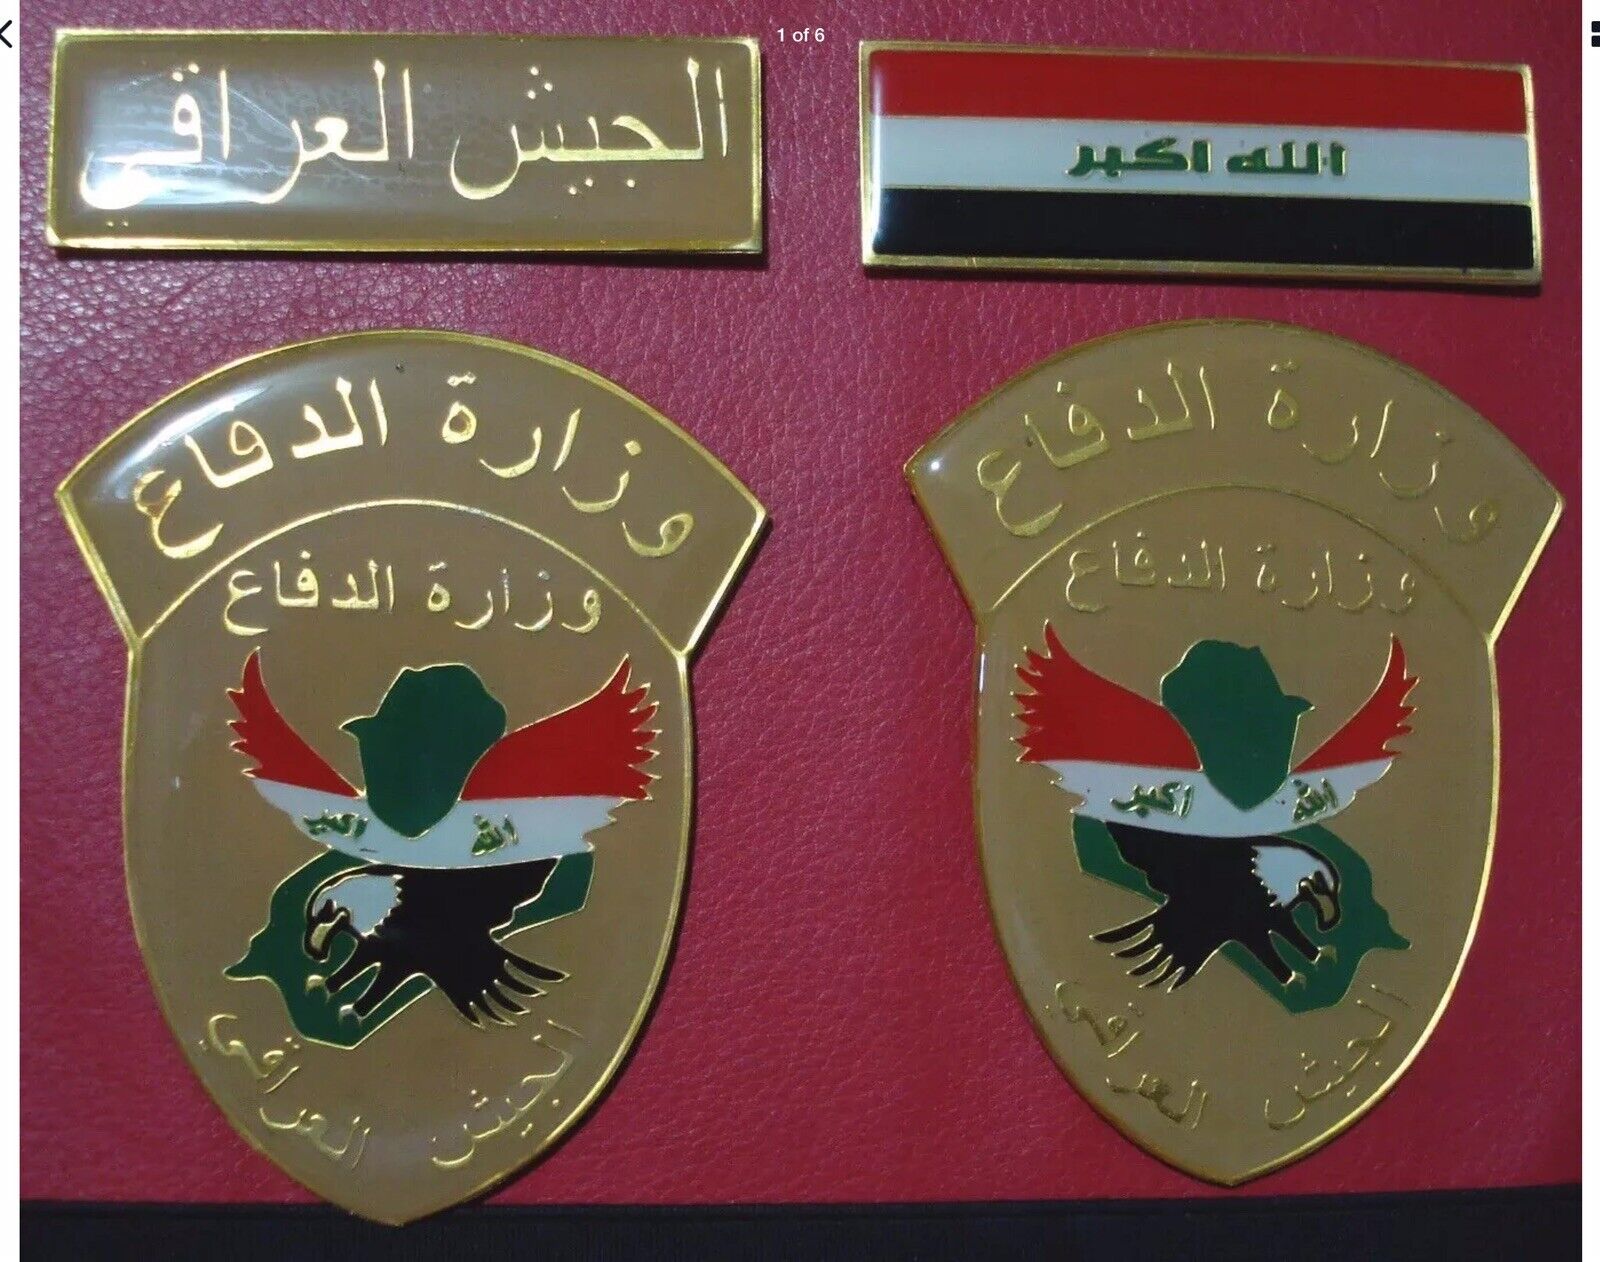 IRAQ-IRAQI ARMY UNIFORM HARD PVC PATCHES 4 PC SET, Last Set